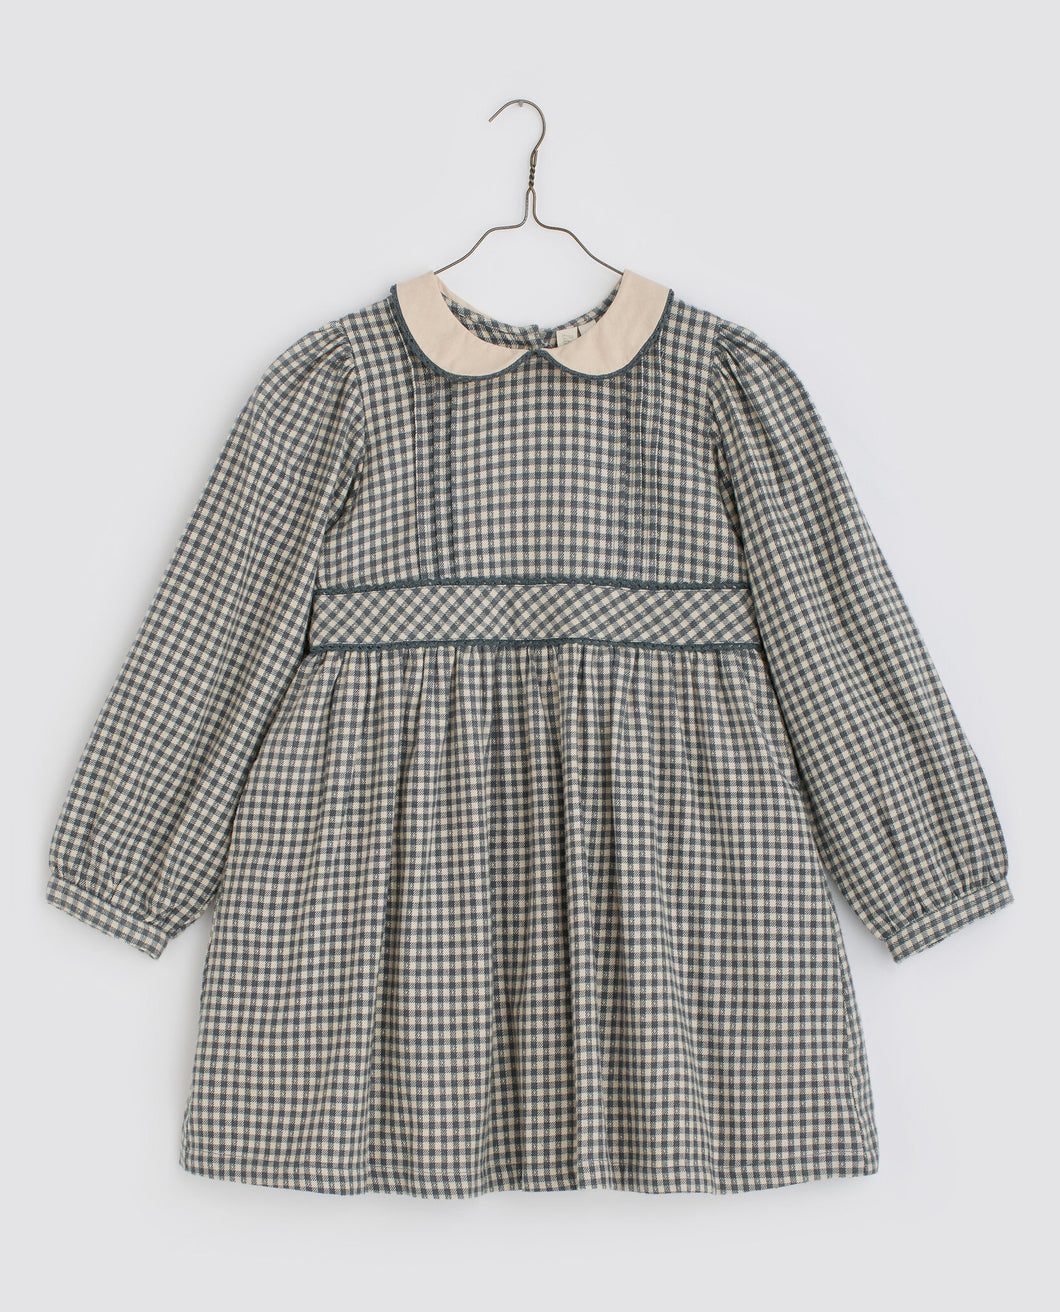 Little Cotton Clothes Isadora Dress - Flannel Cove Blue Check - 5/6Y Last One